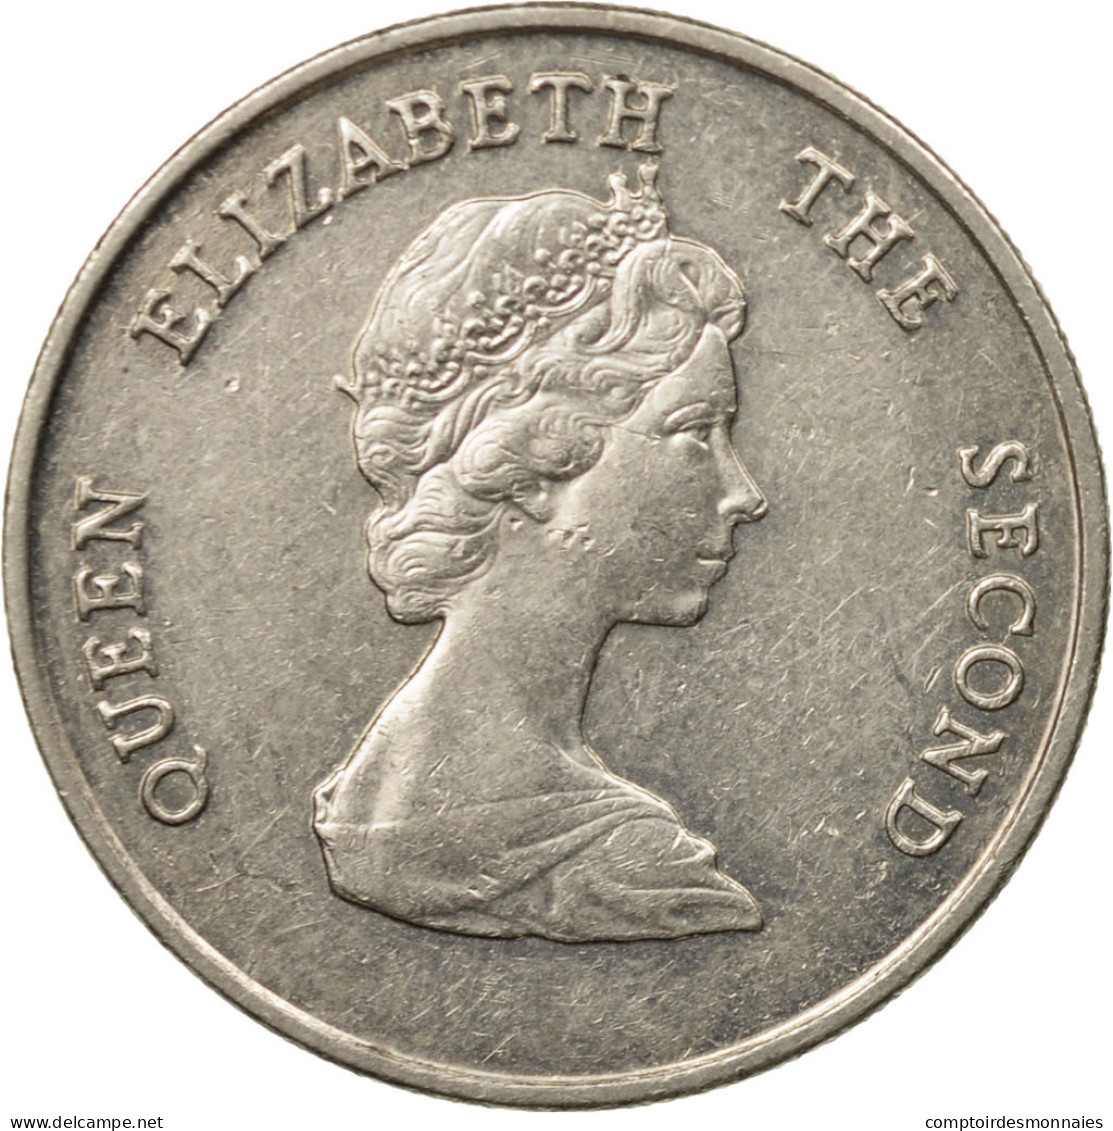 Monnaie, Etats Des Caraibes Orientales, Elizabeth II, 25 Cents, 1995, TTB - Caraibi Britannici (Territori)